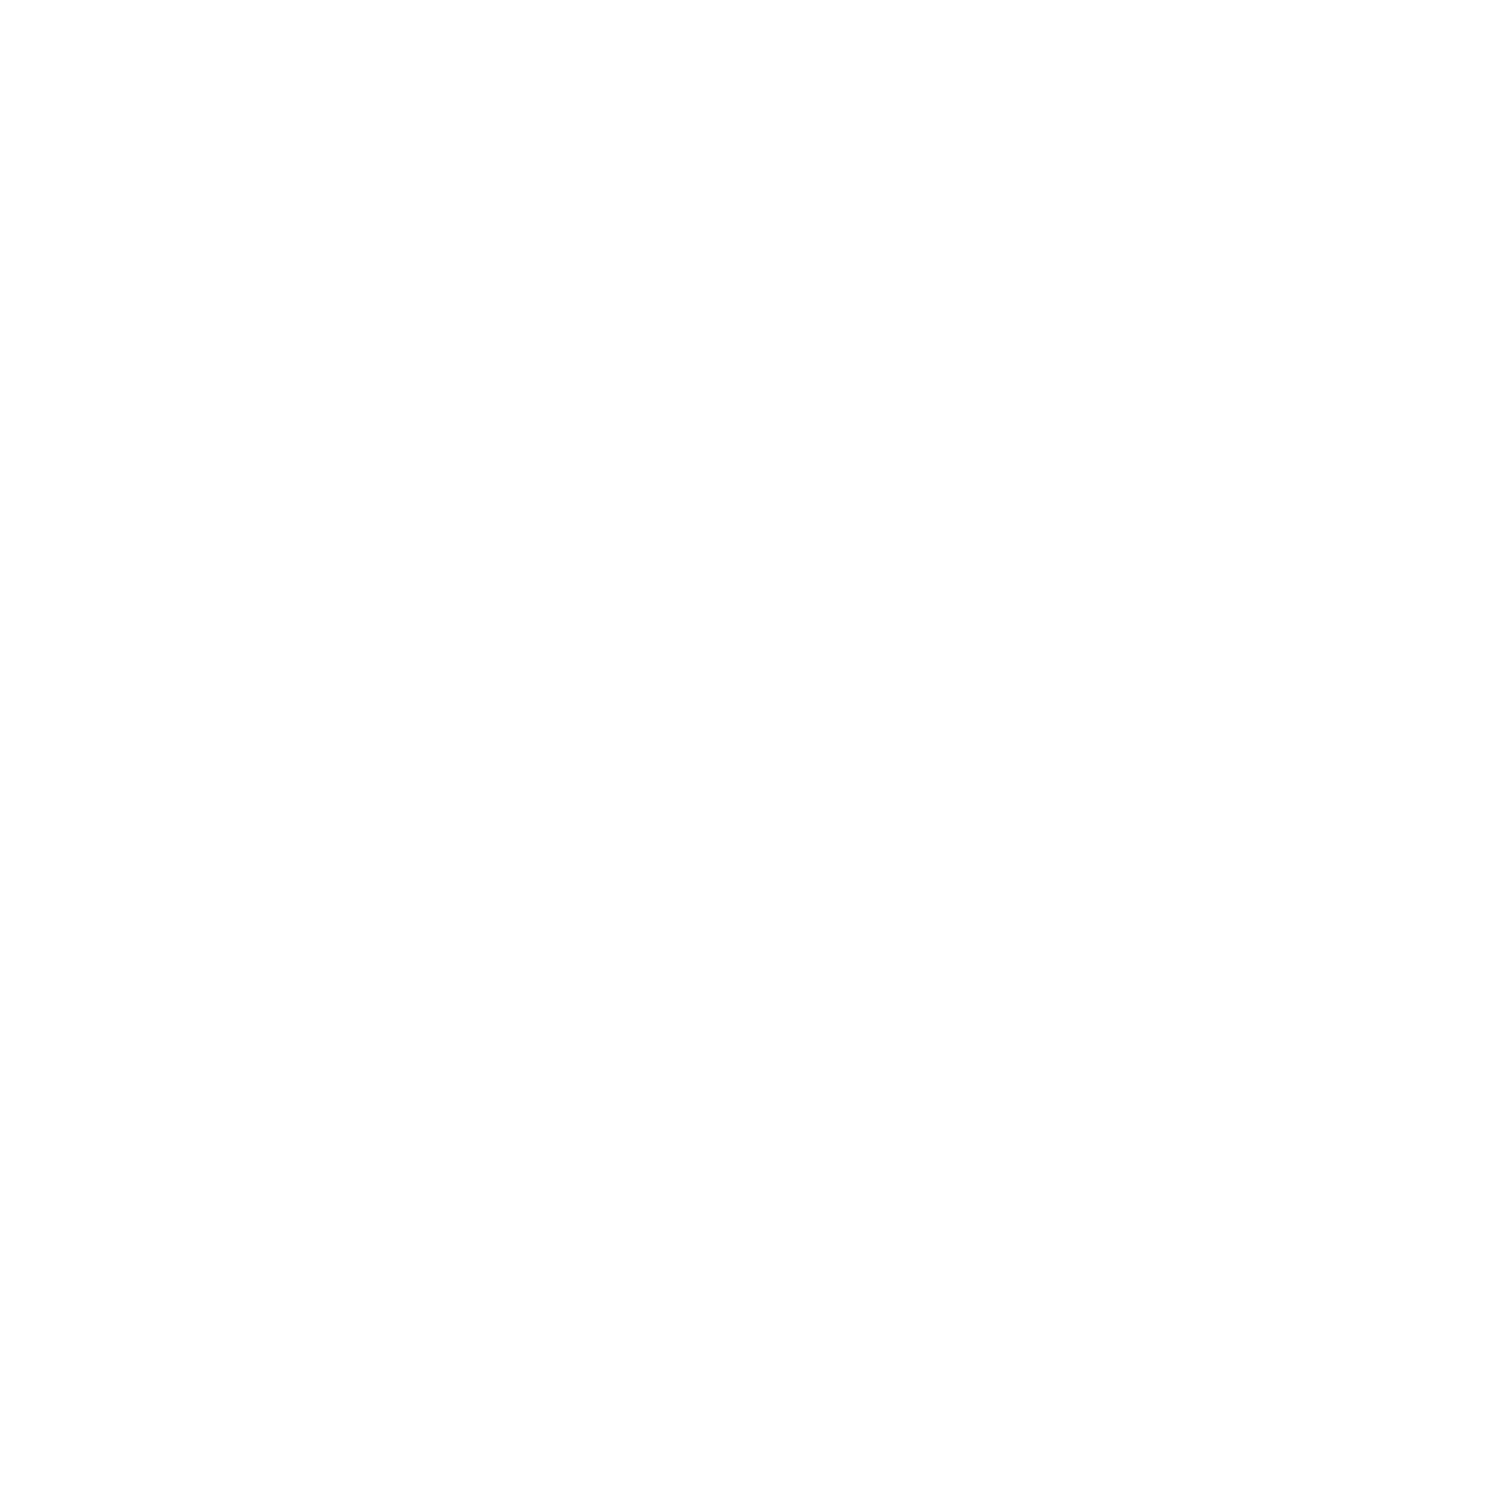 Patriot Aircraft USA